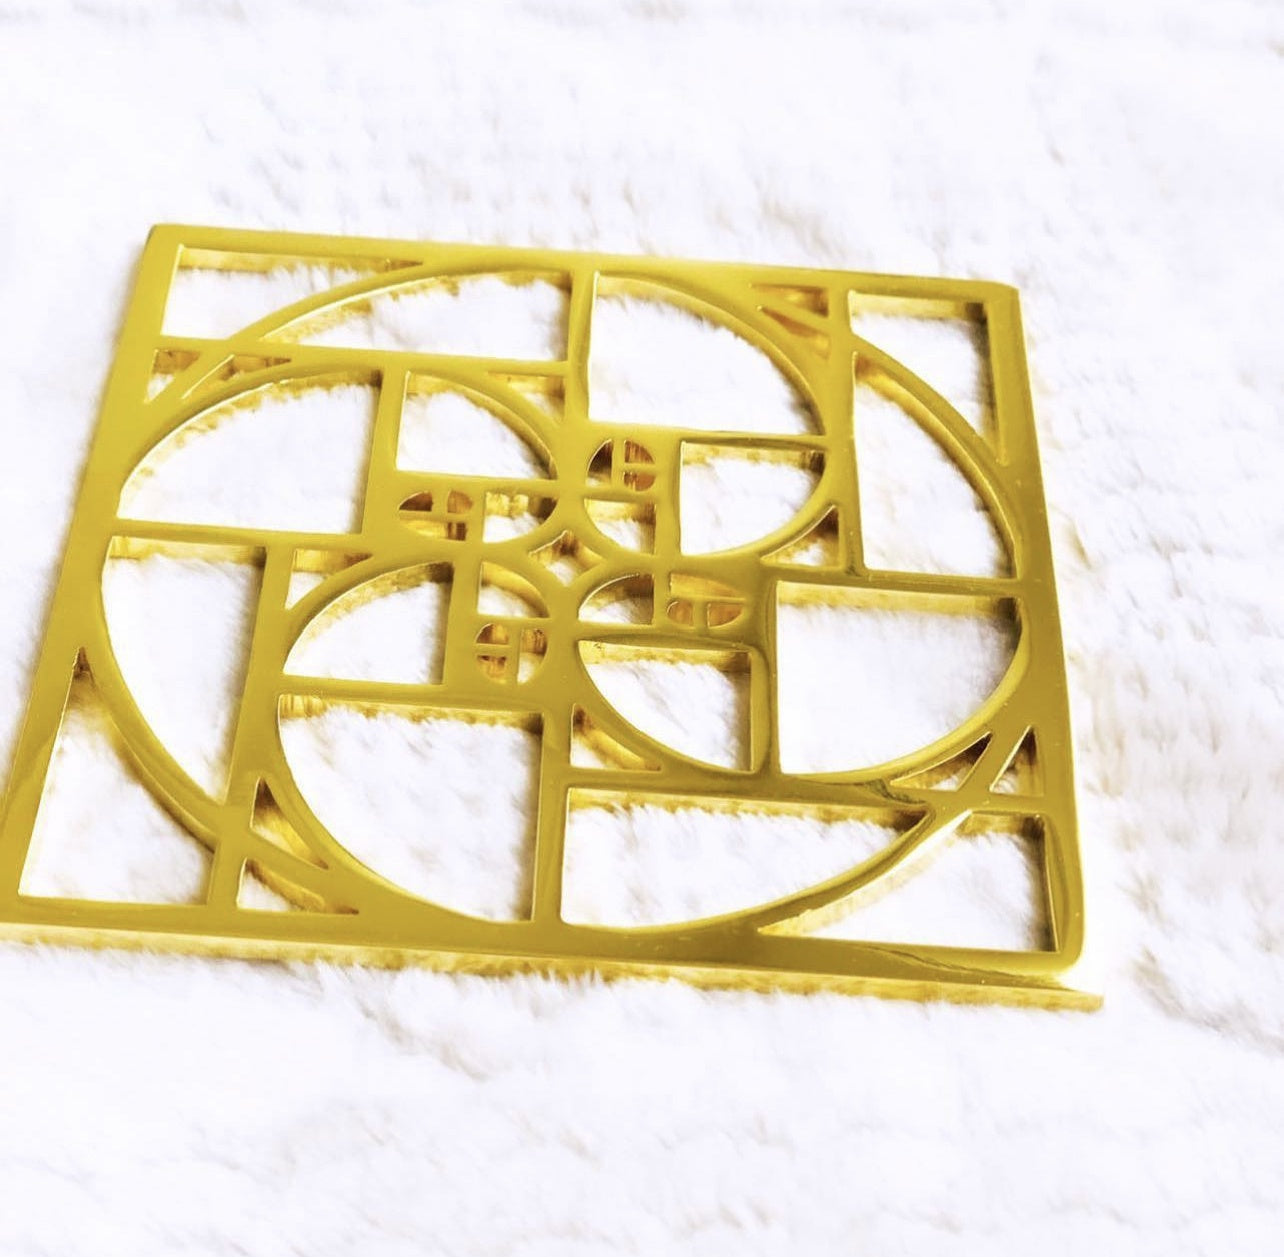 Golden Ratio Fibonacci Tool Gold 24k plated